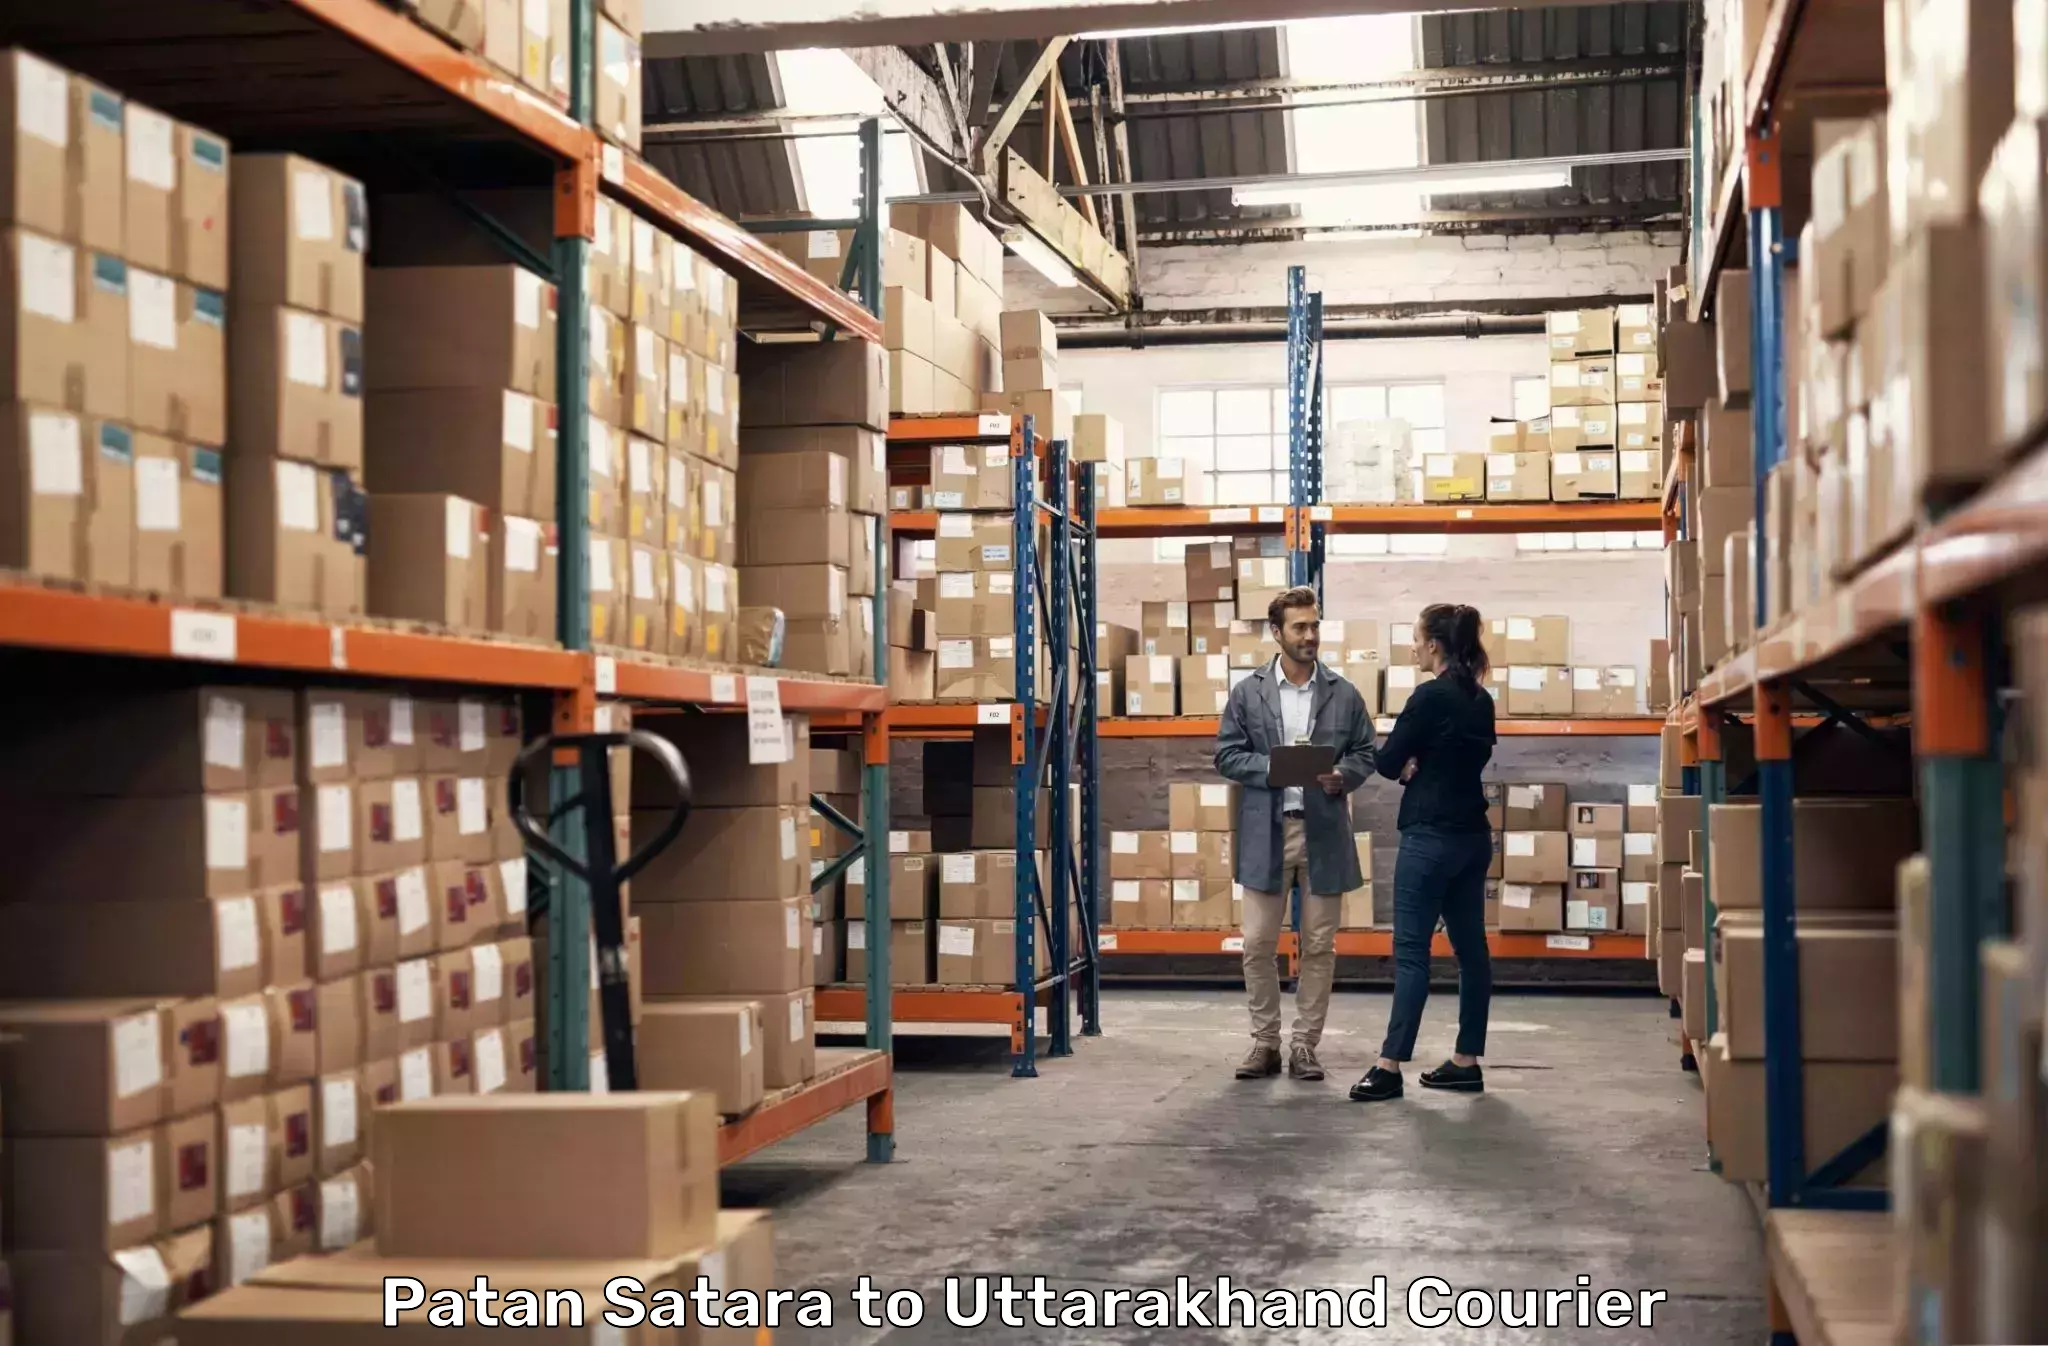 Business delivery service Patan Satara to Pithoragarh